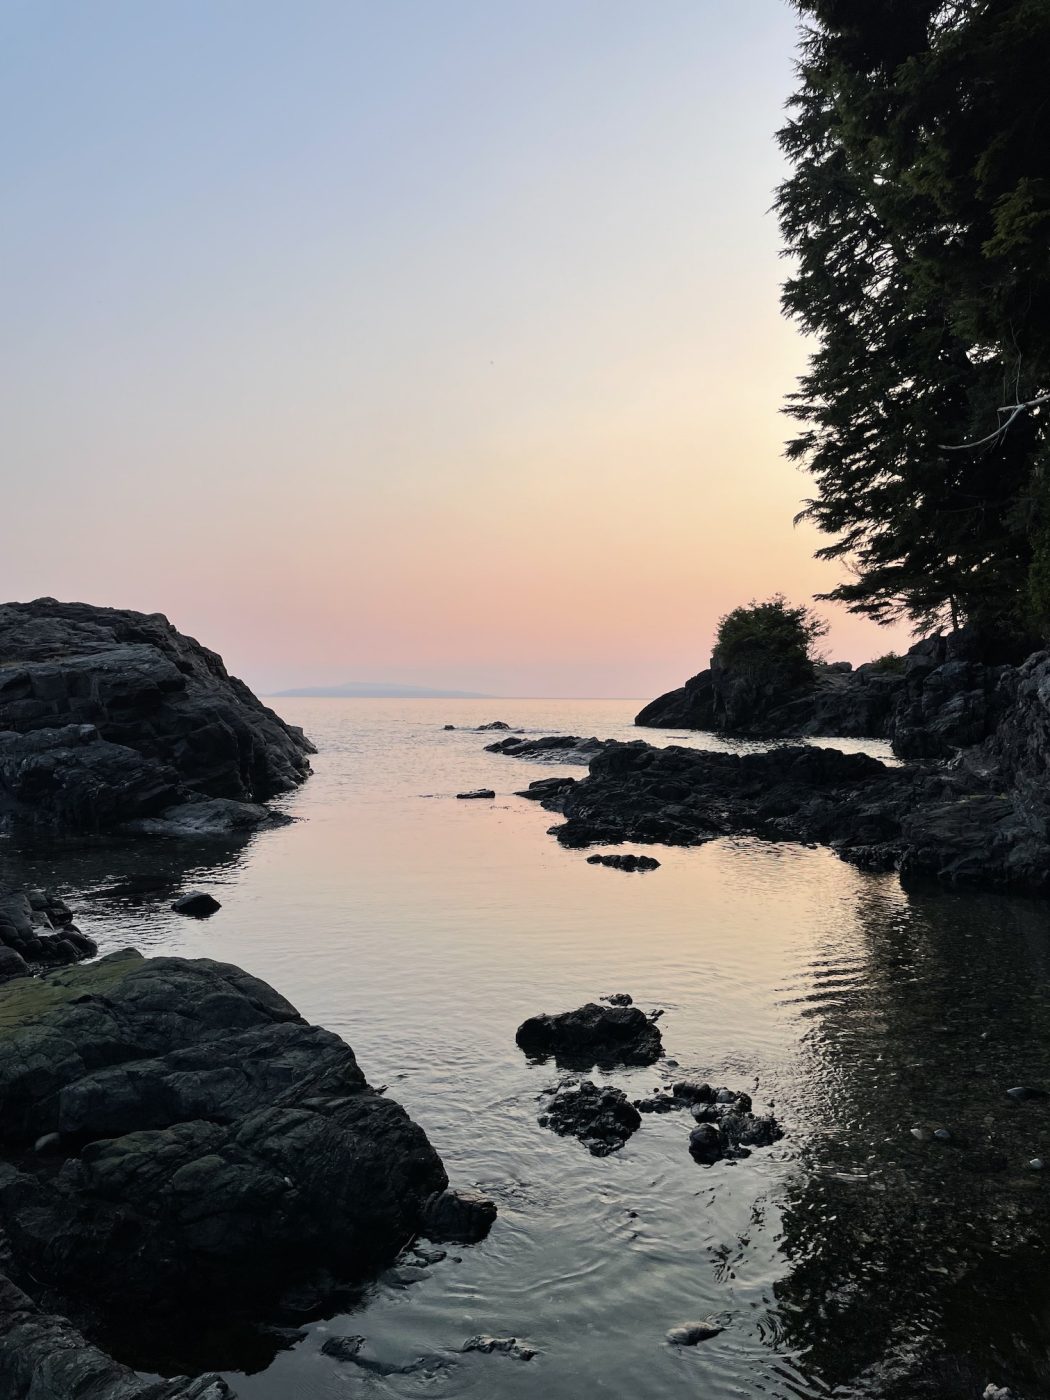 The coastline of Sooke, BC at dawn.